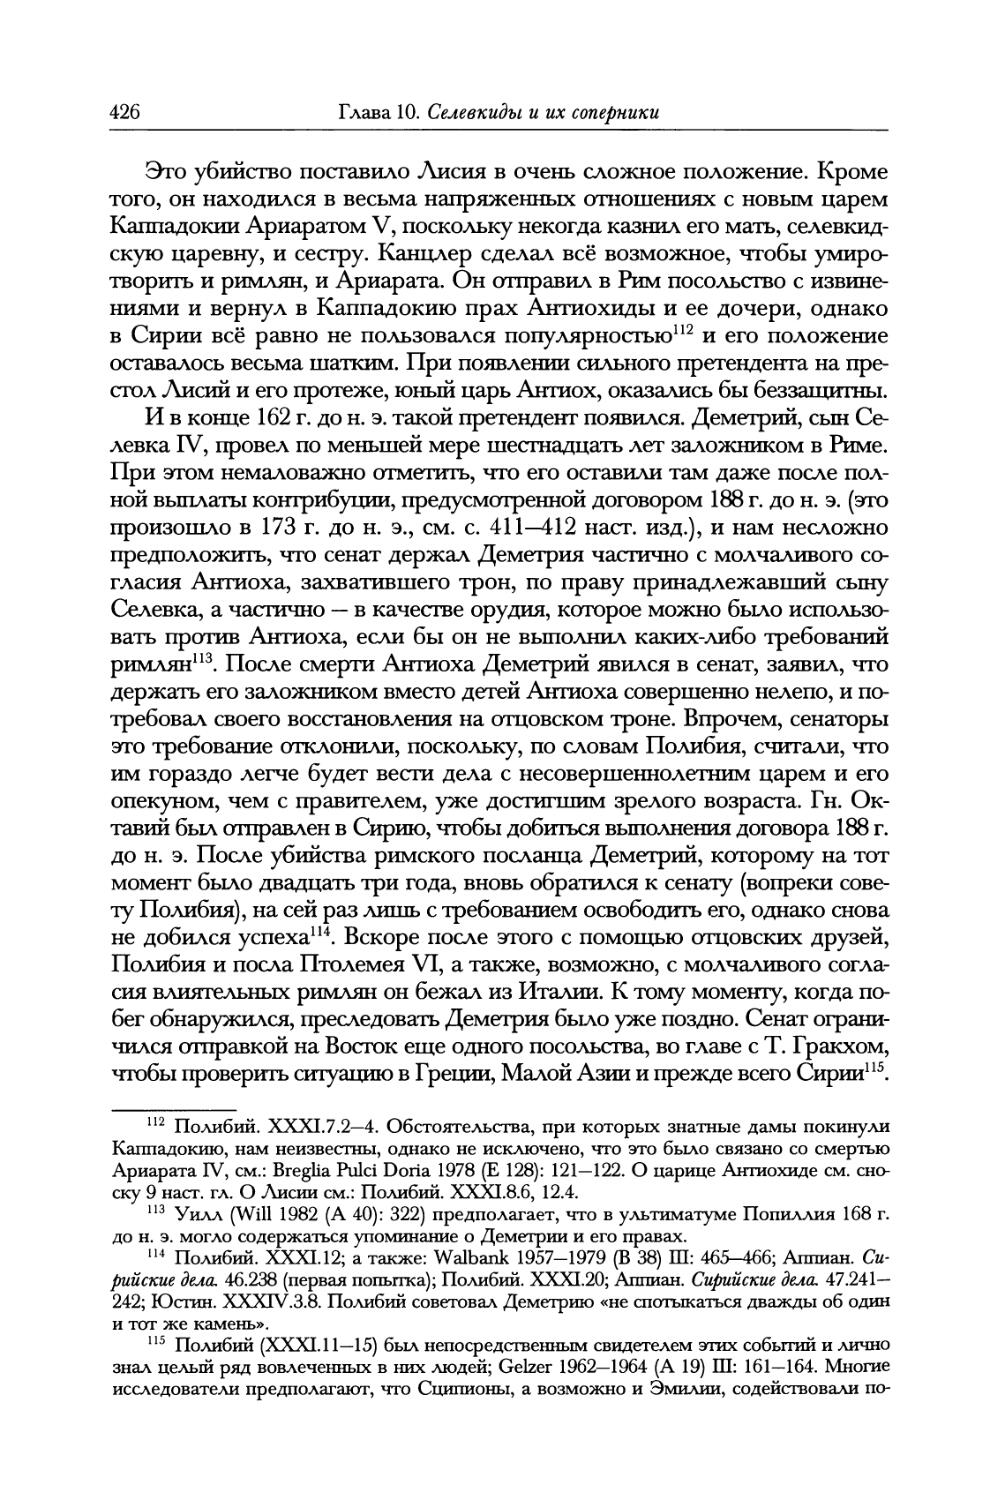 III. Закат Селевкидов, 162—120 гг. до н. э.